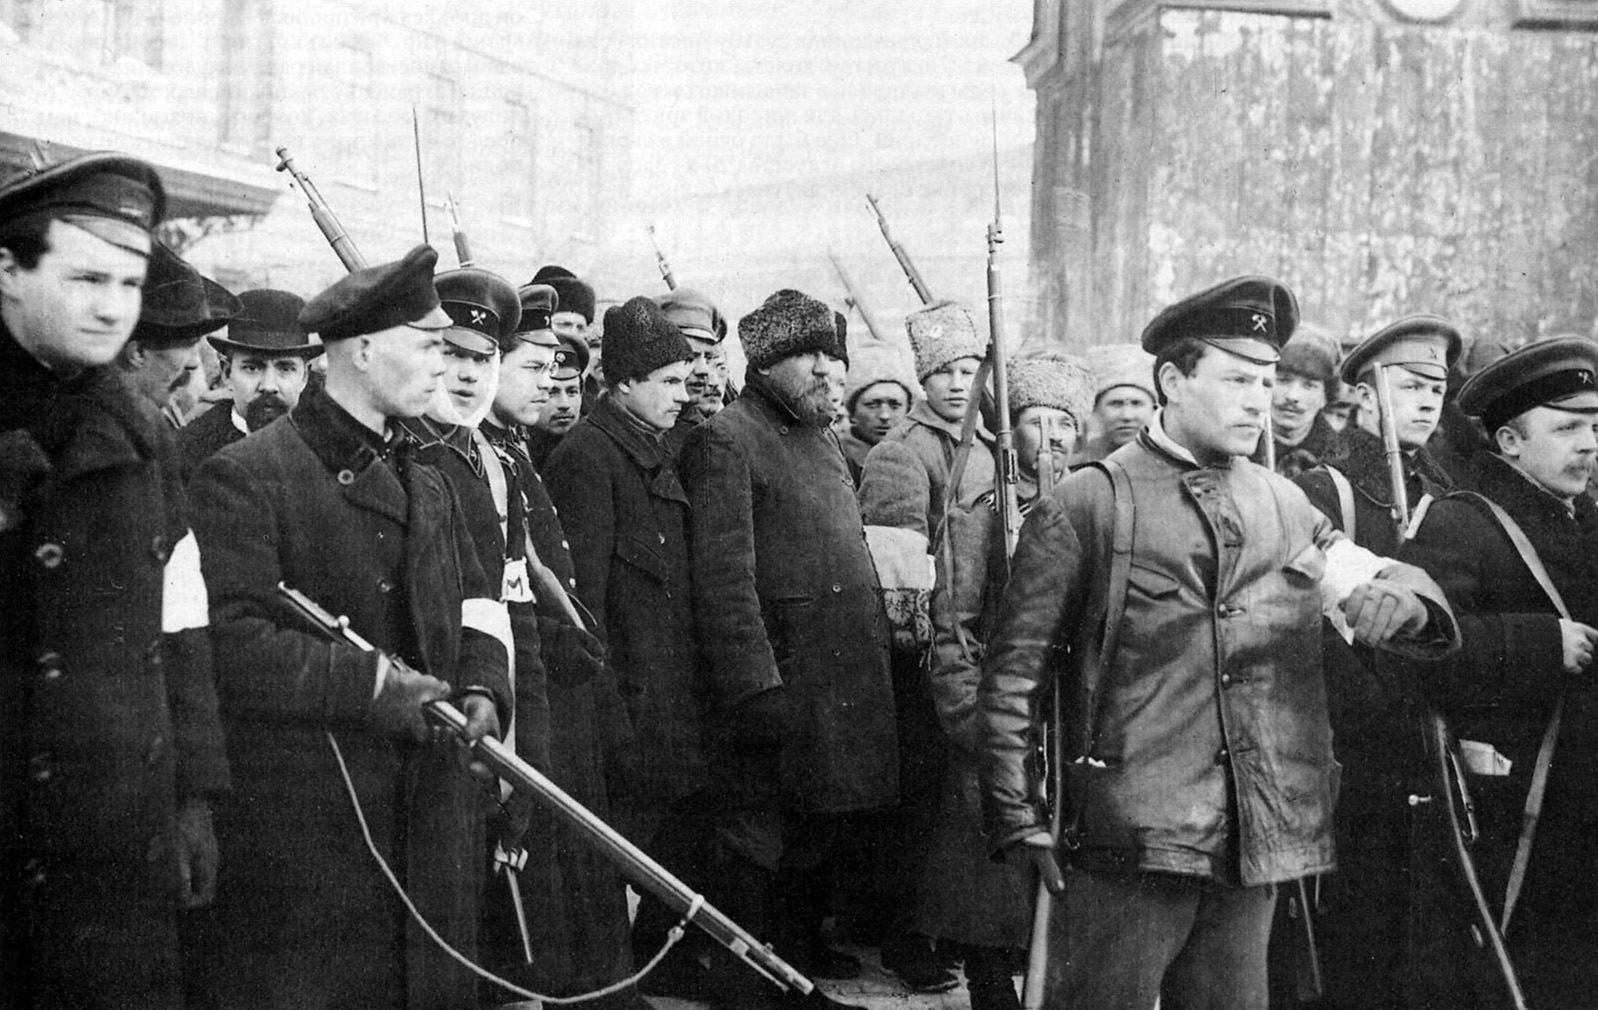 Patrol of the October revolution Image public domain